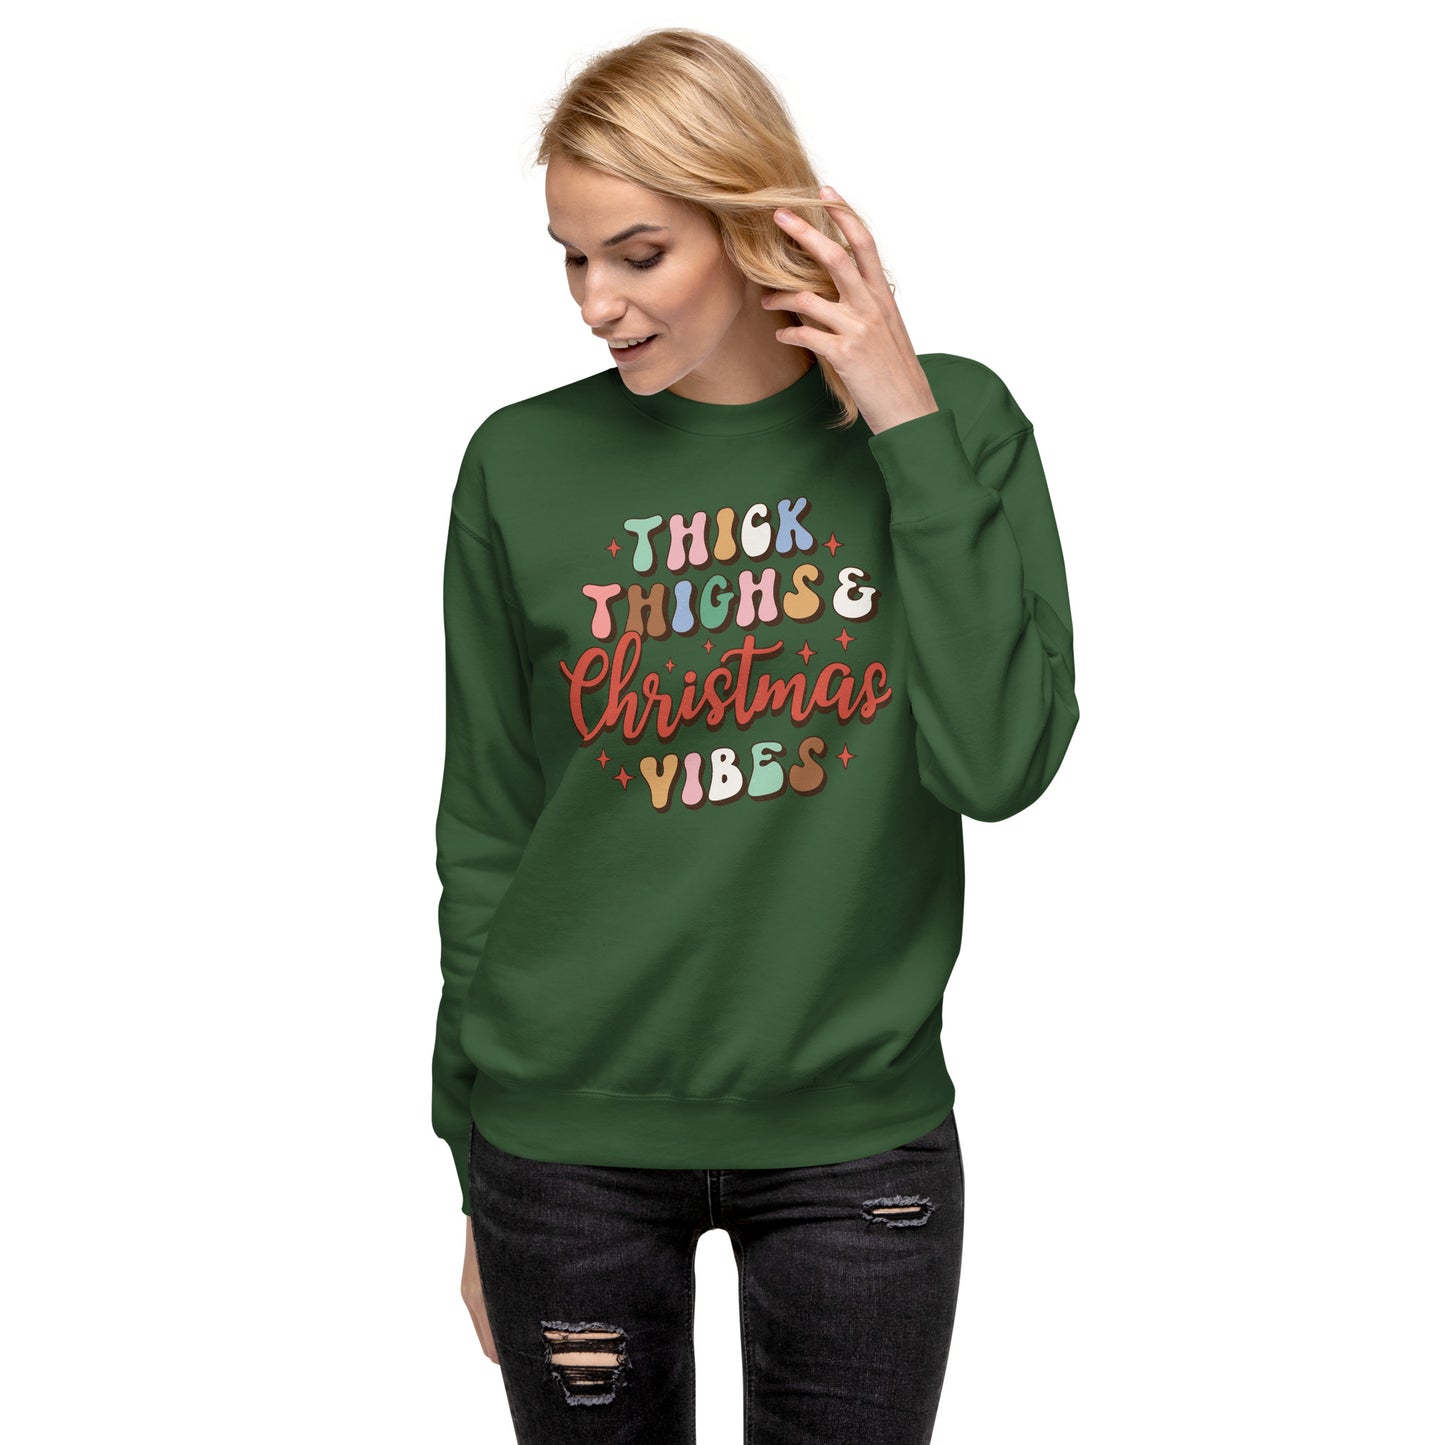 Thick Thighs & Christmas Vibes Holiday Unisex Premium Sweatshirt